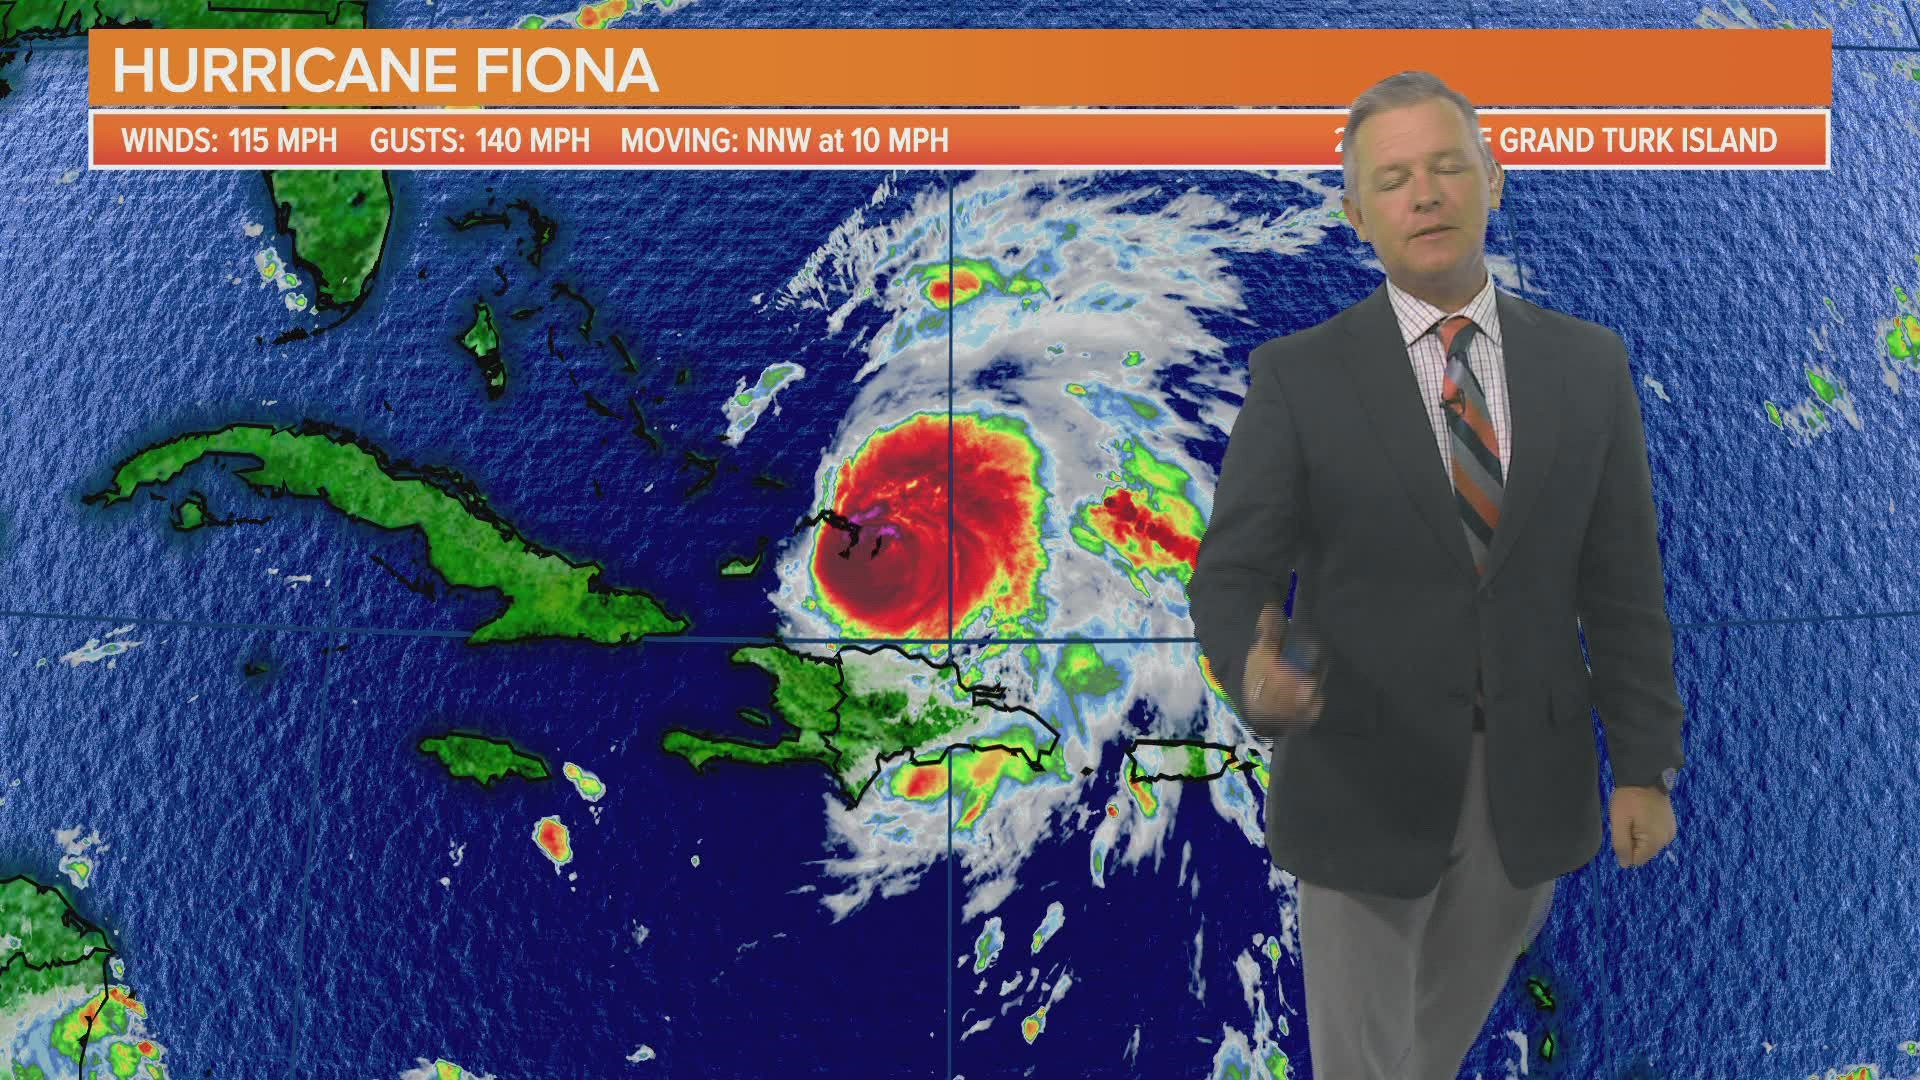 Fiona became the first major hurricane of the 2022 season.